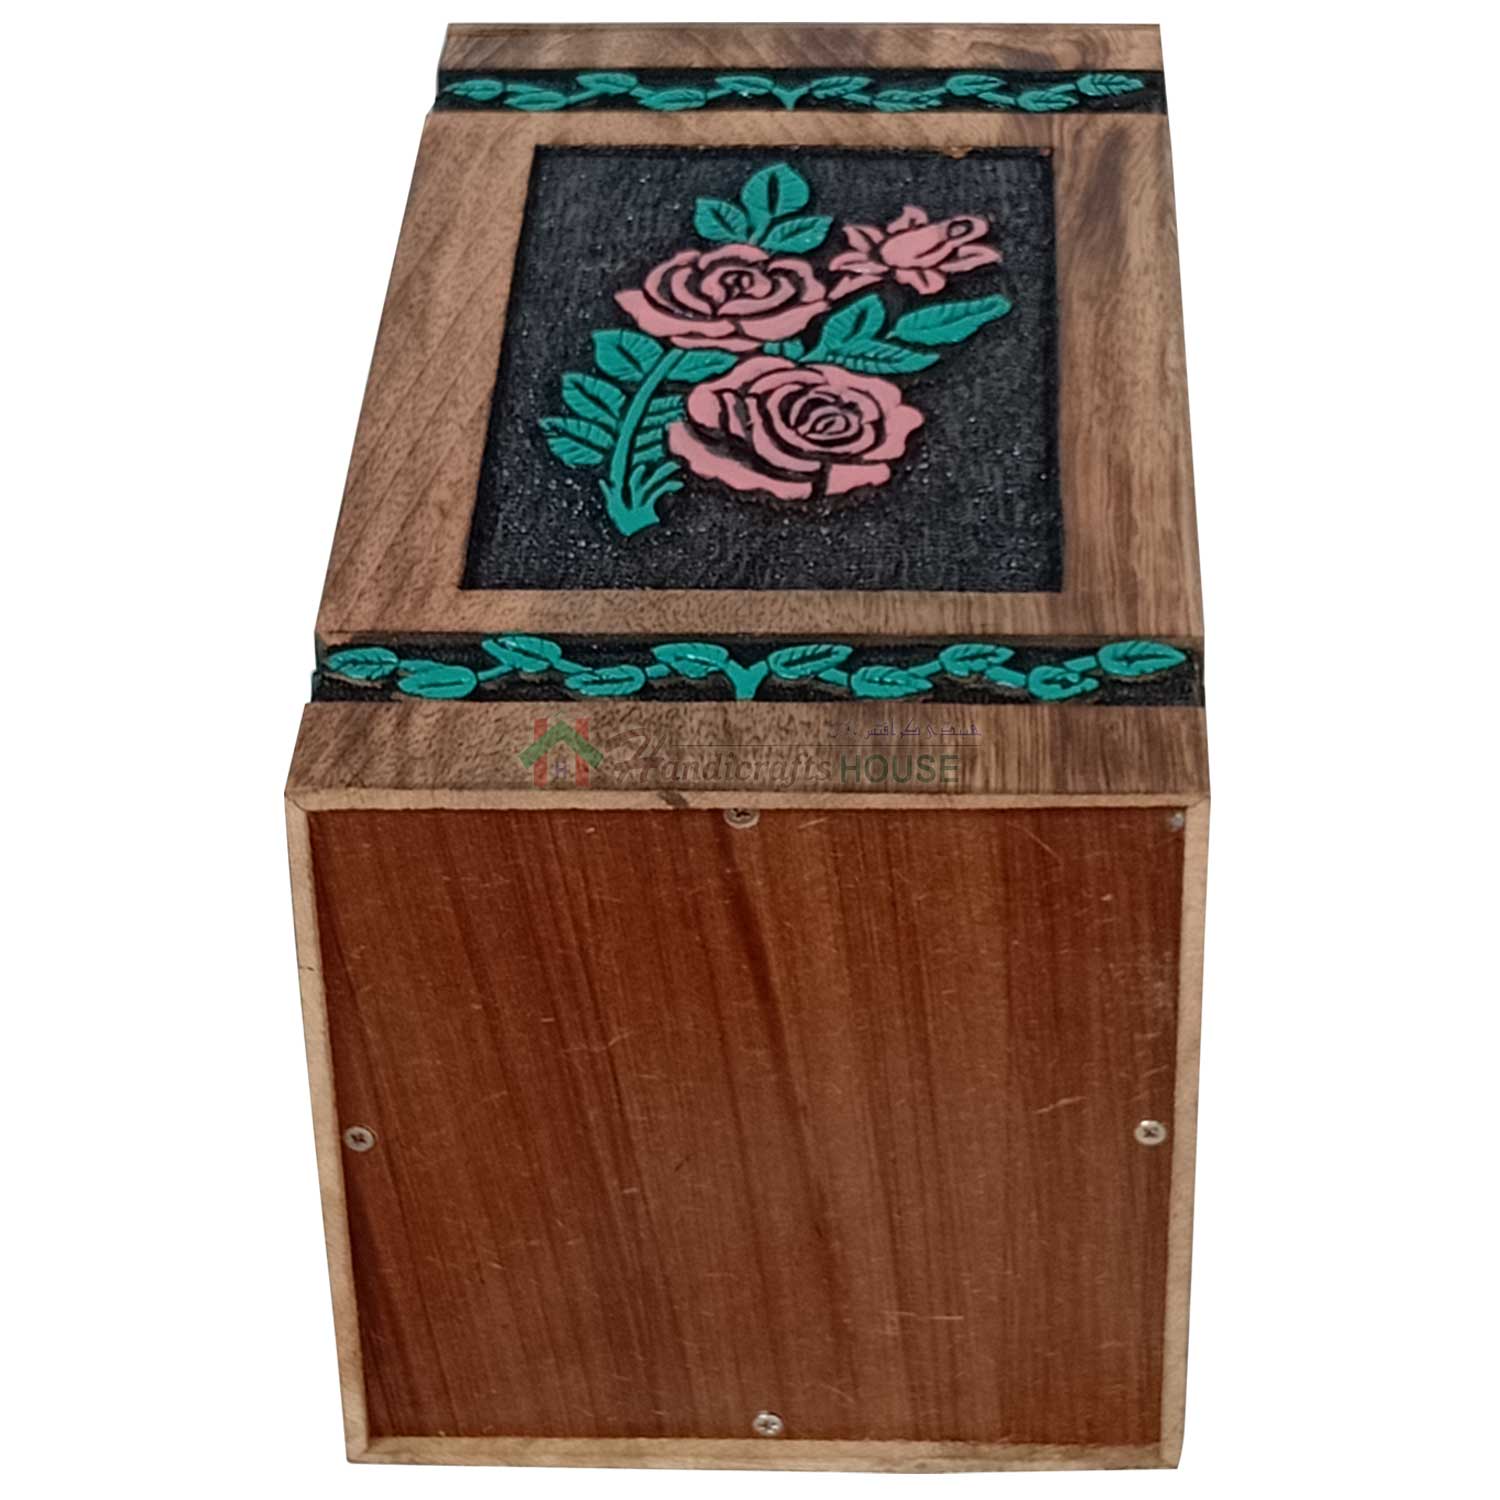 Rose Flower Hands Engraving Wooden Cremation Urns, Wood Urn for Human or Pet Ashes Adult - Hardwood Memorial Large Box 250 cu/in (Large)